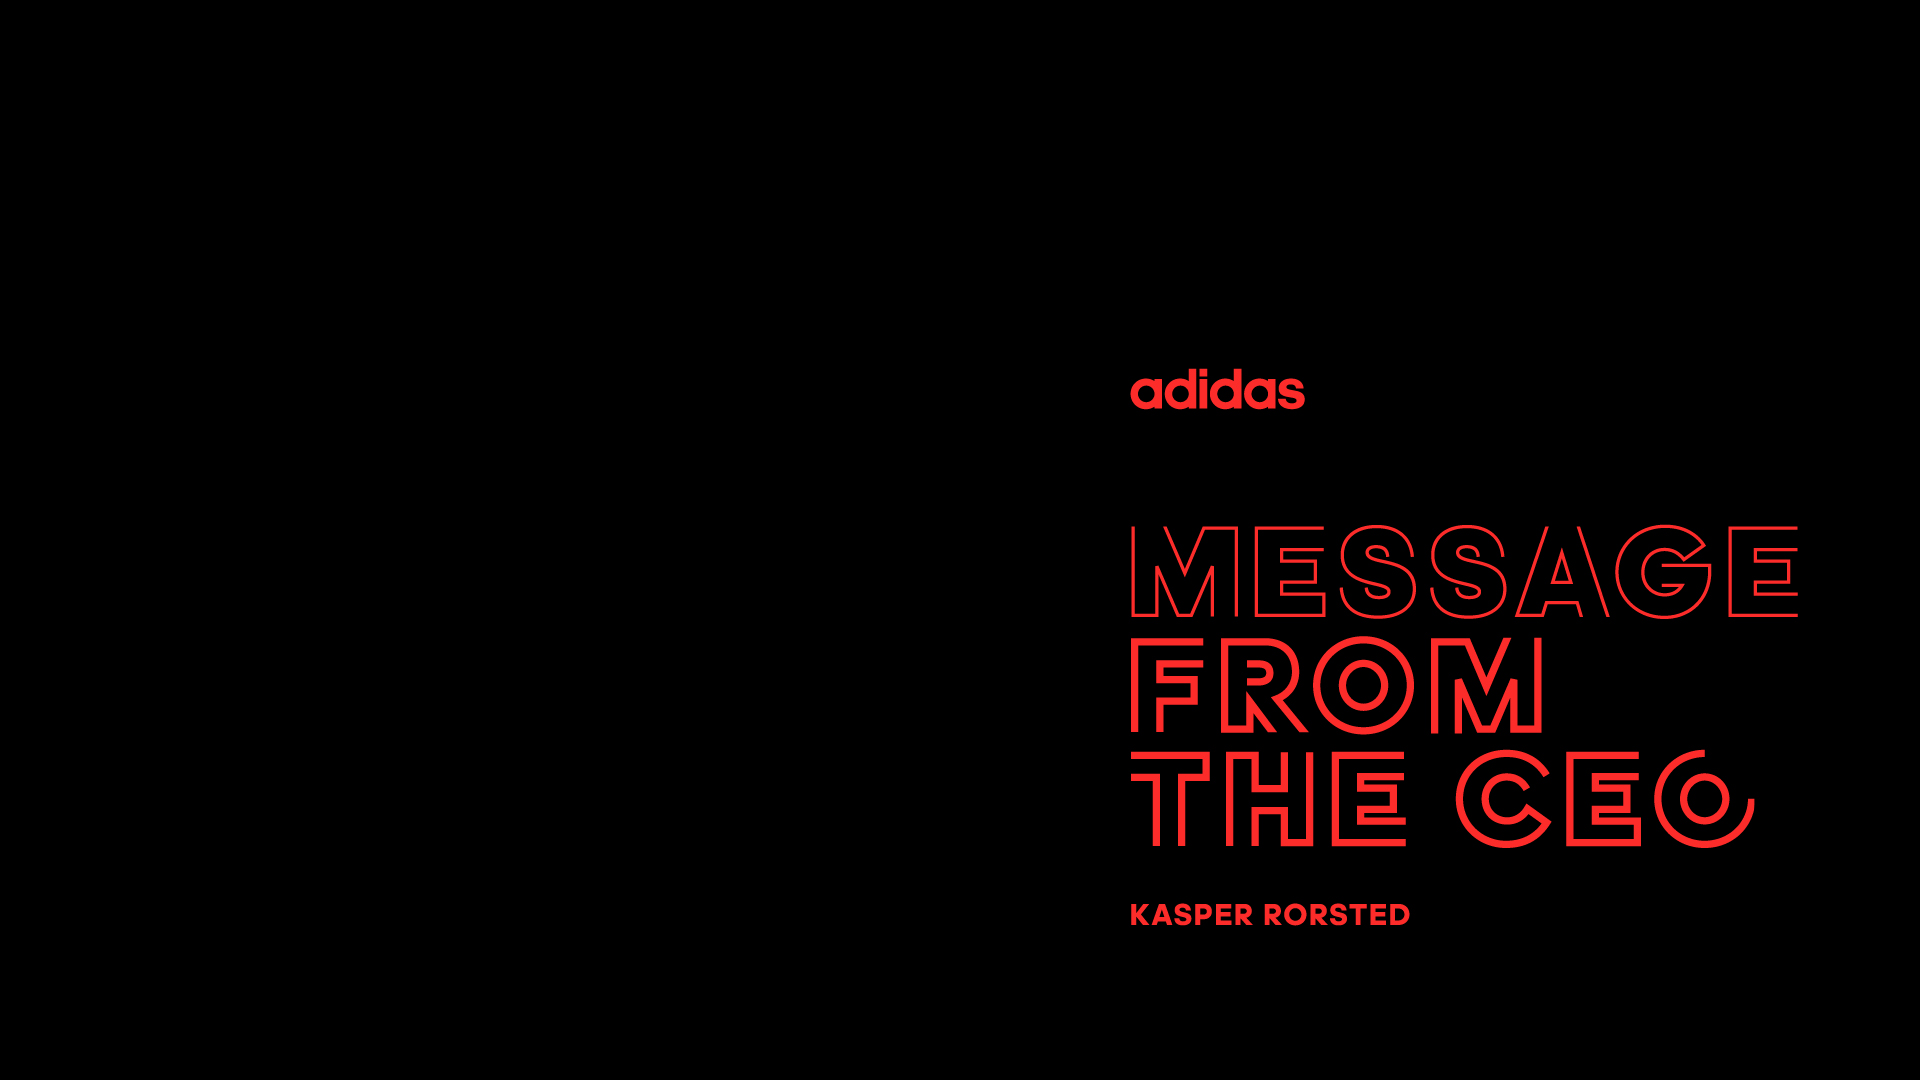 adidas uk annual report